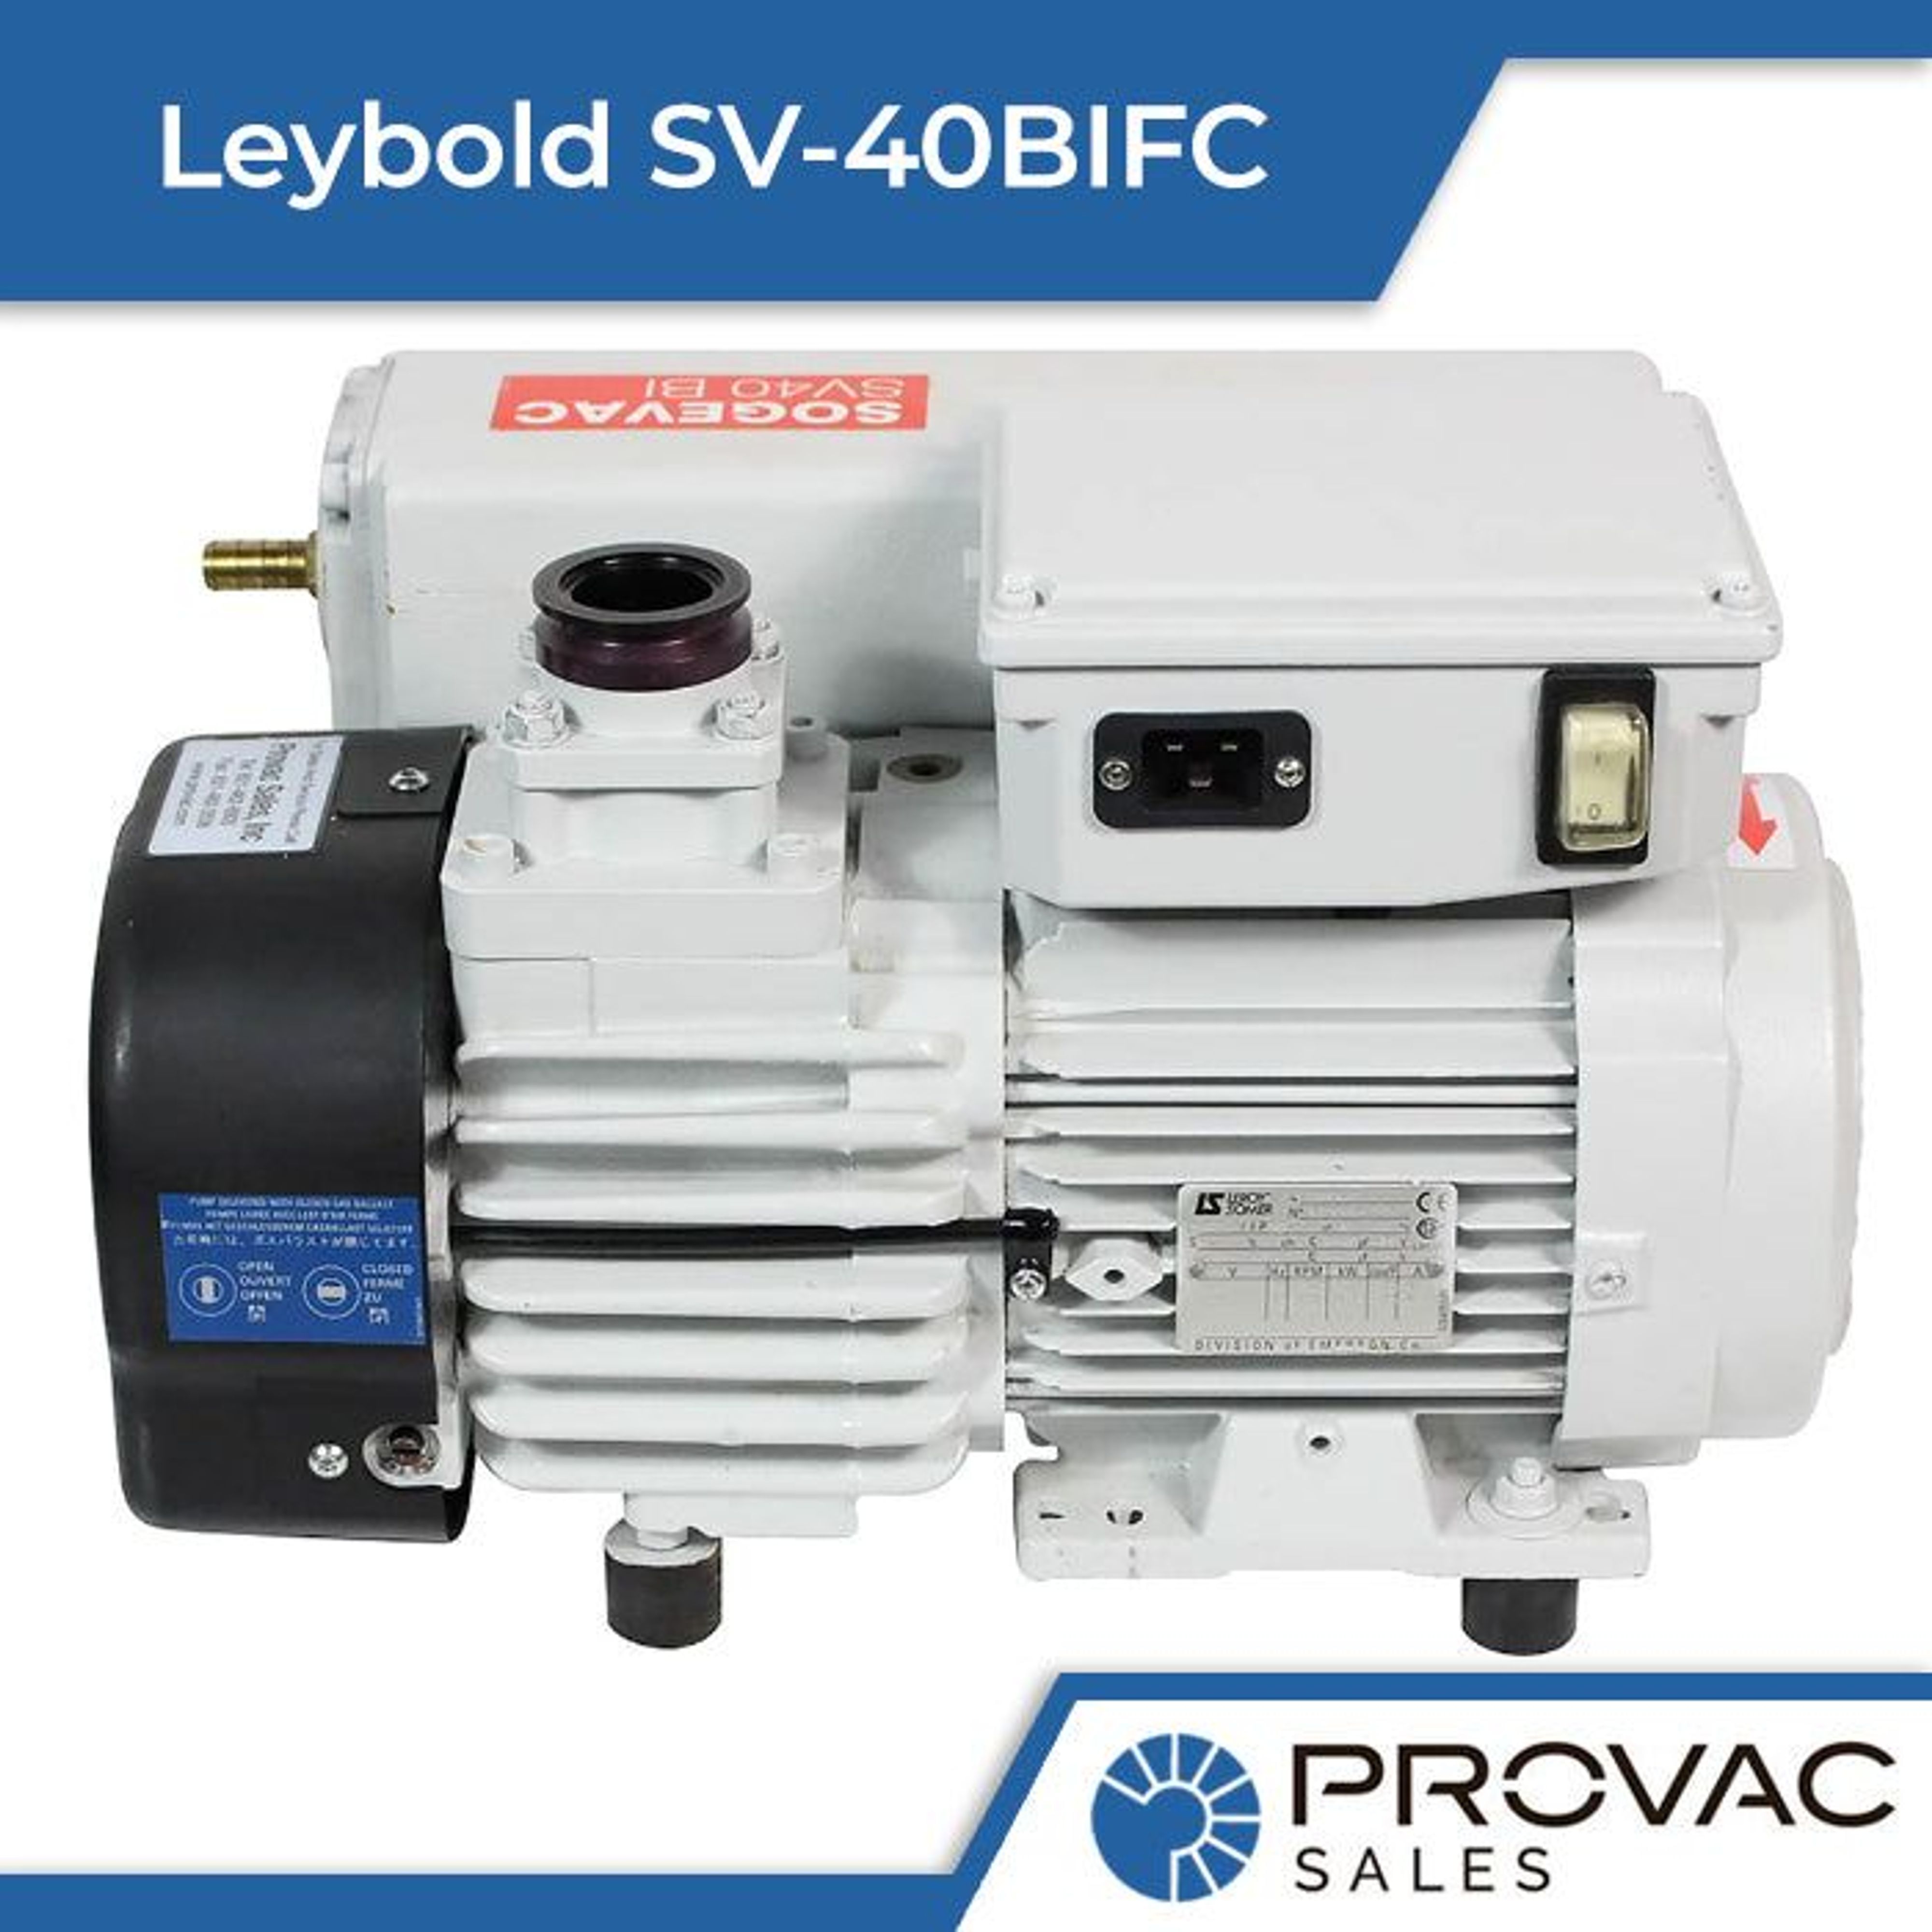 Leybold SV-40BIFC Vane Pump: In Stock, Ready To Ship Background